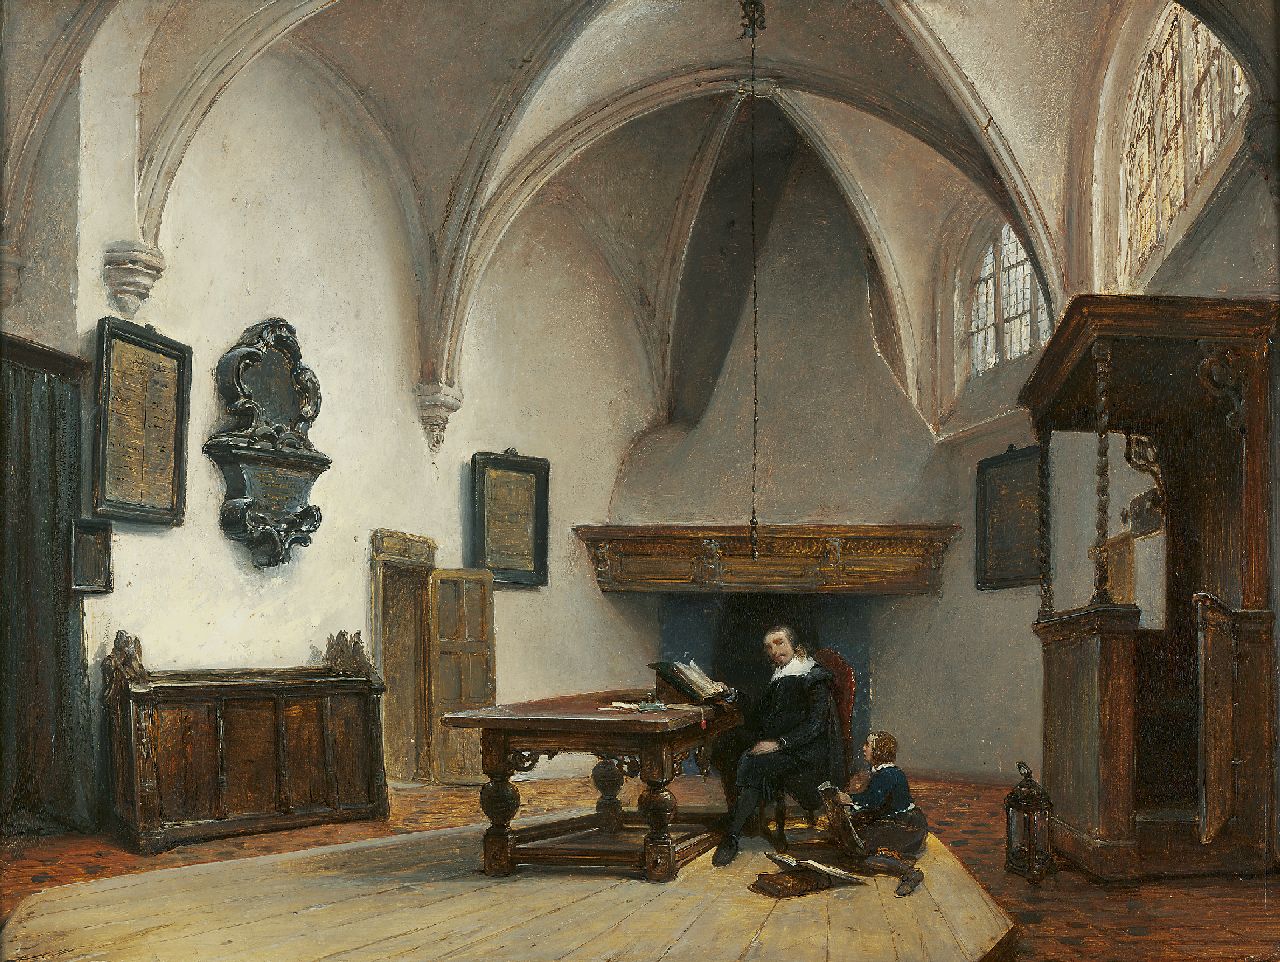 Bosboom J.  | Johannes Bosboom, The Grote Kerk, Breda, Holland, oil on panel 37.5 x 45.5 cm, signed l.r. and painted ca. 1850